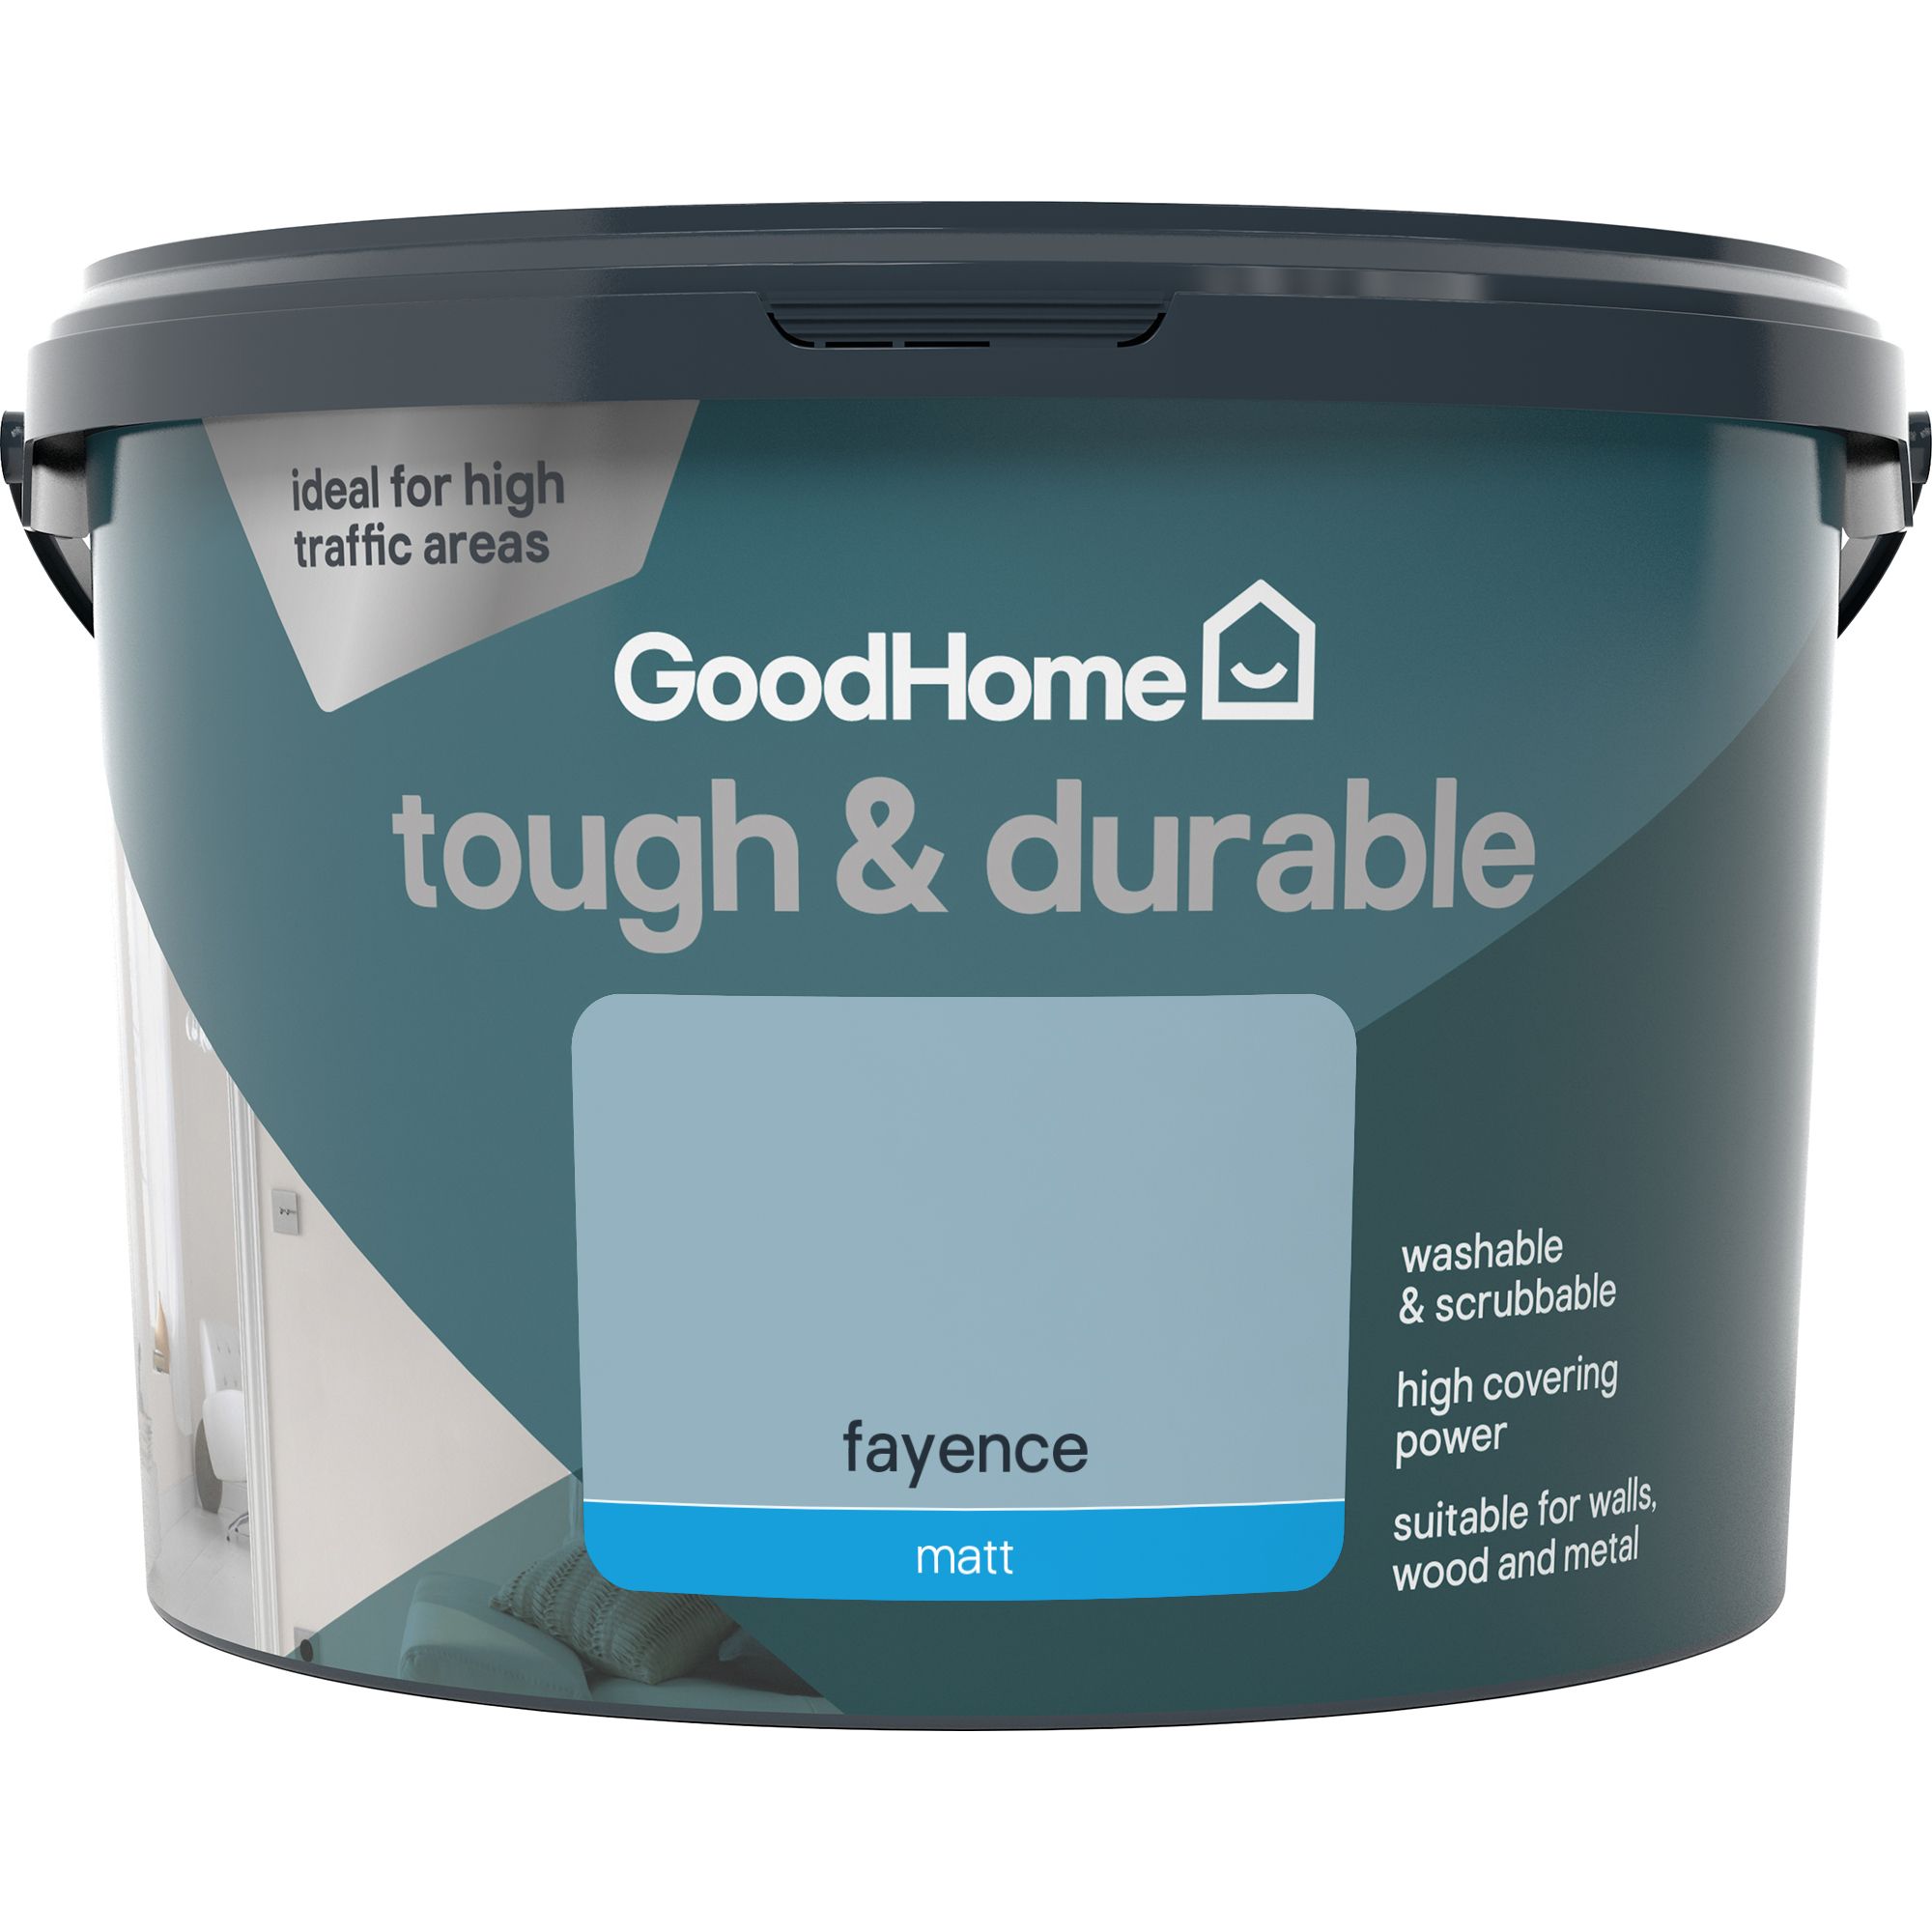 GoodHome Tough & Durable Fayence Matt Emulsion paint, 2.5L